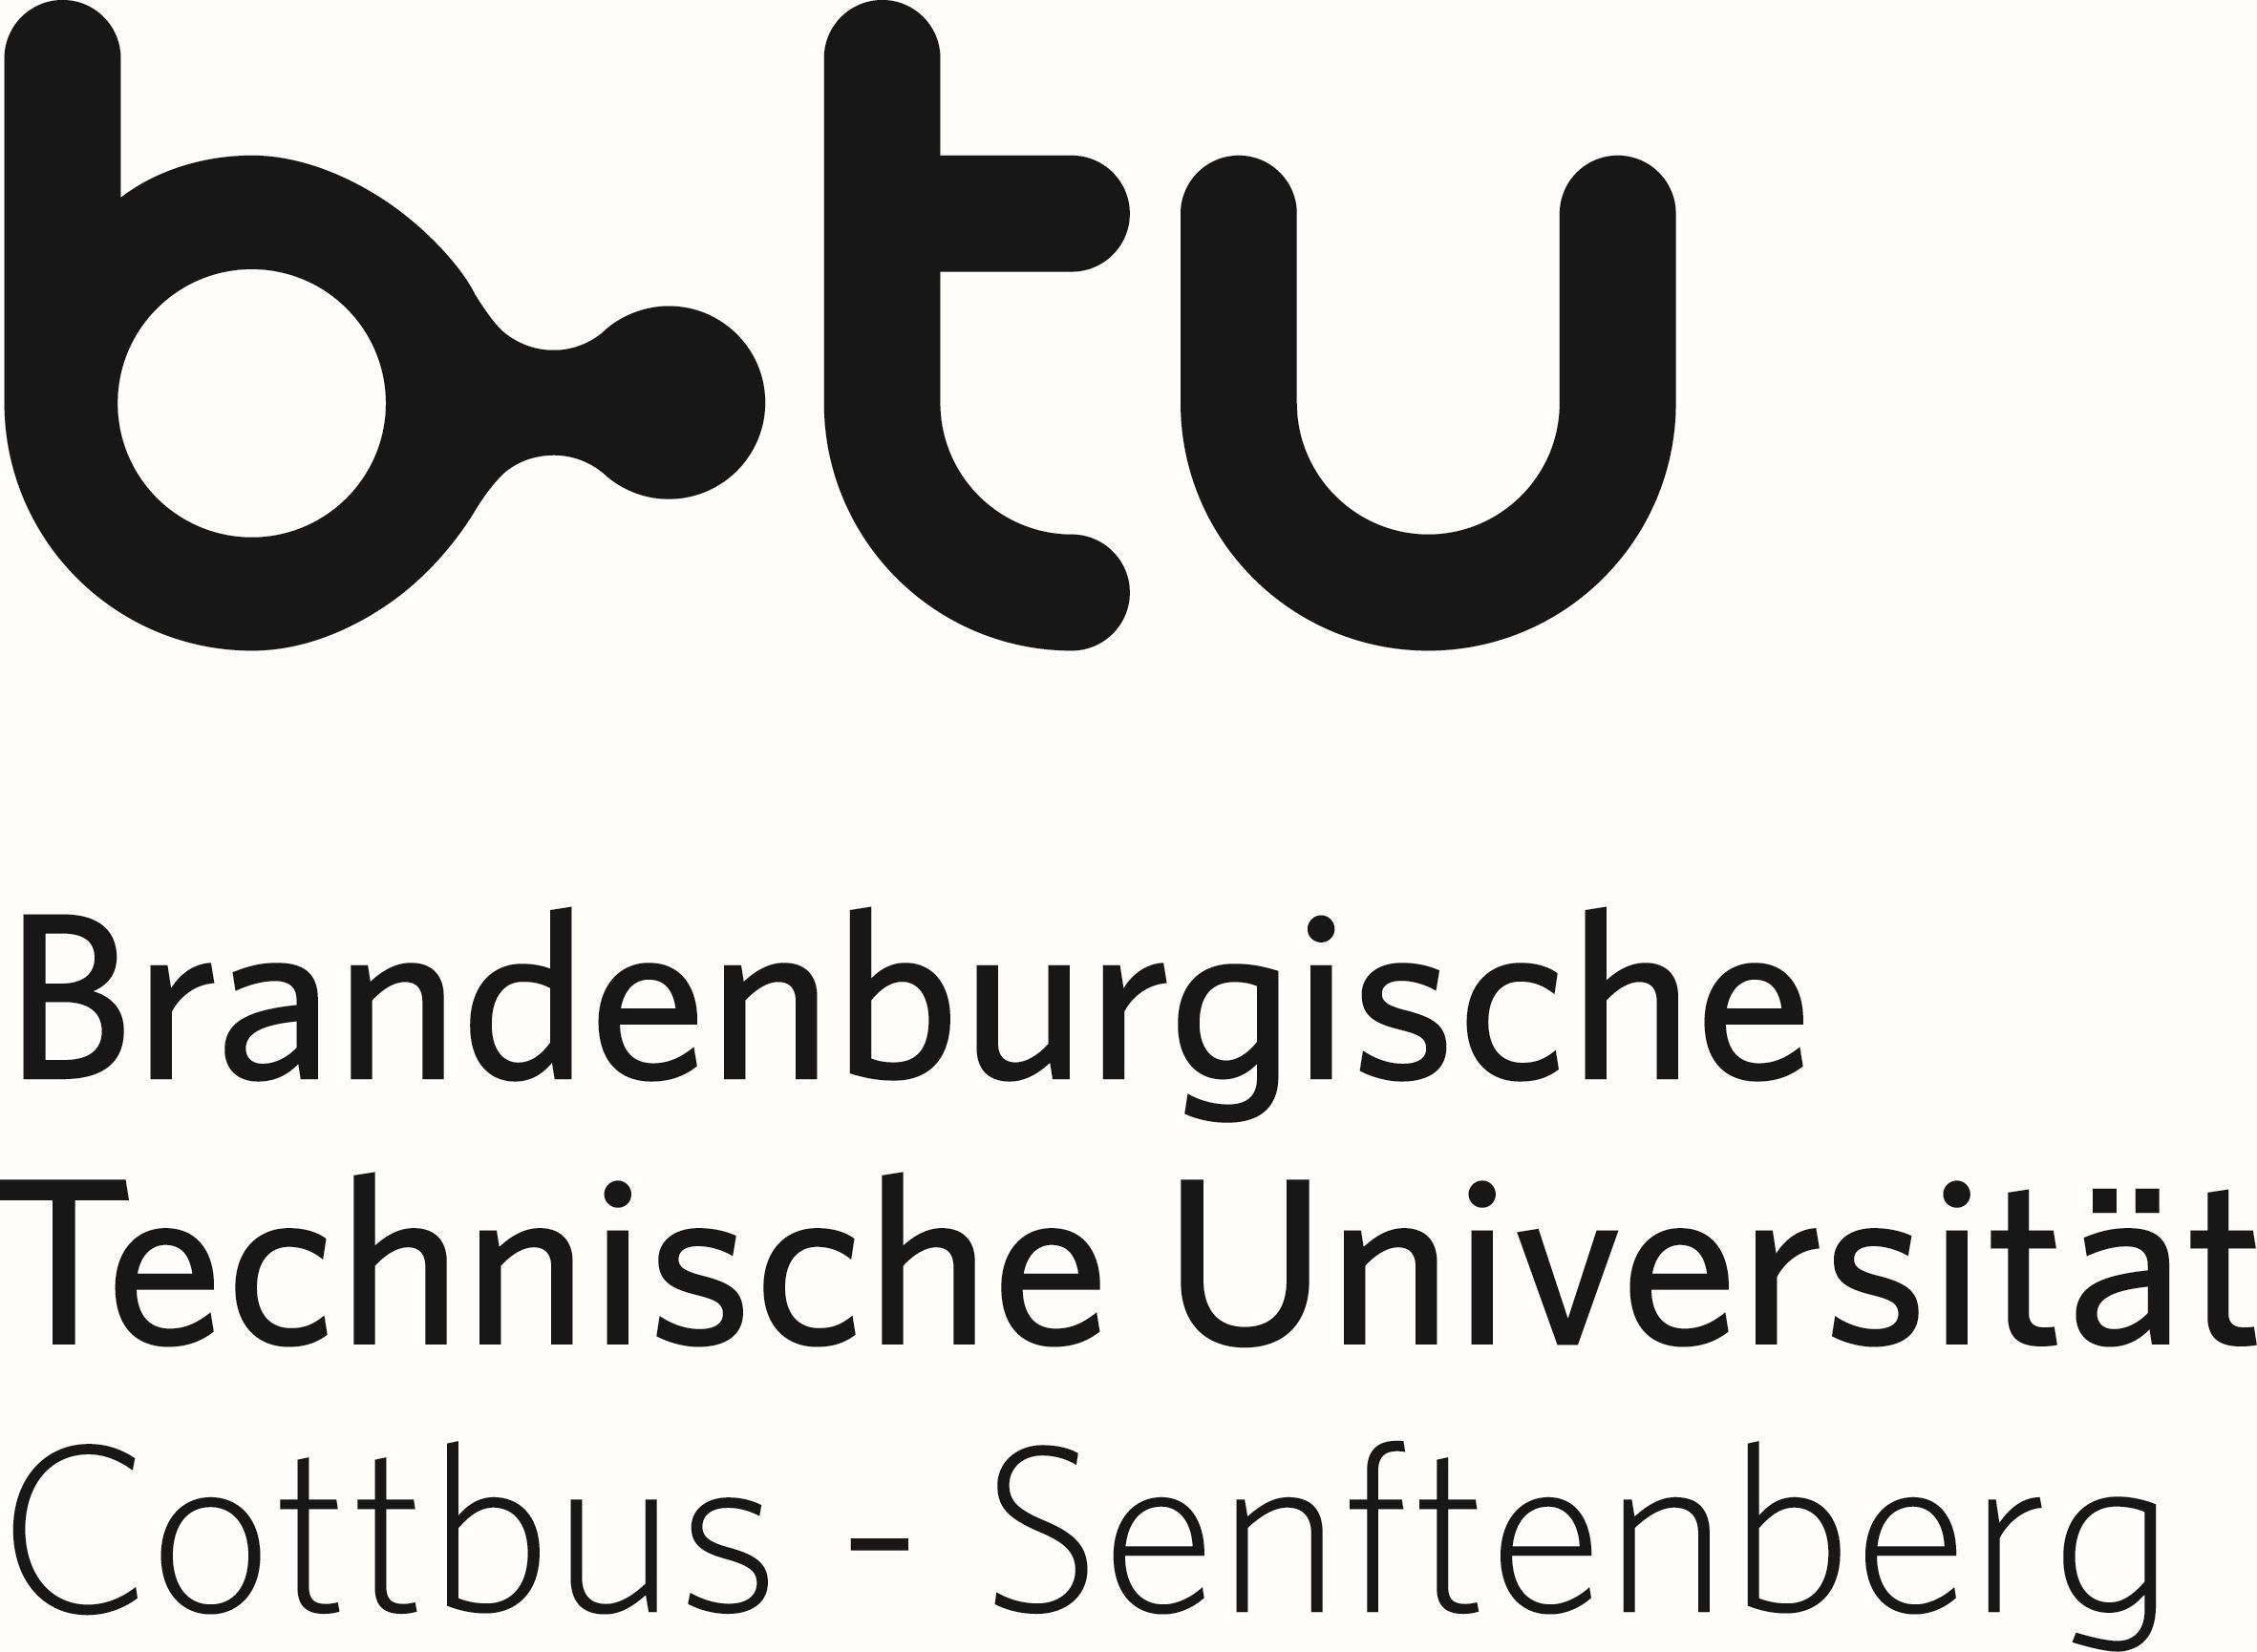 BTU - Brandenburg University of Technology Cottbus - Senftenberg